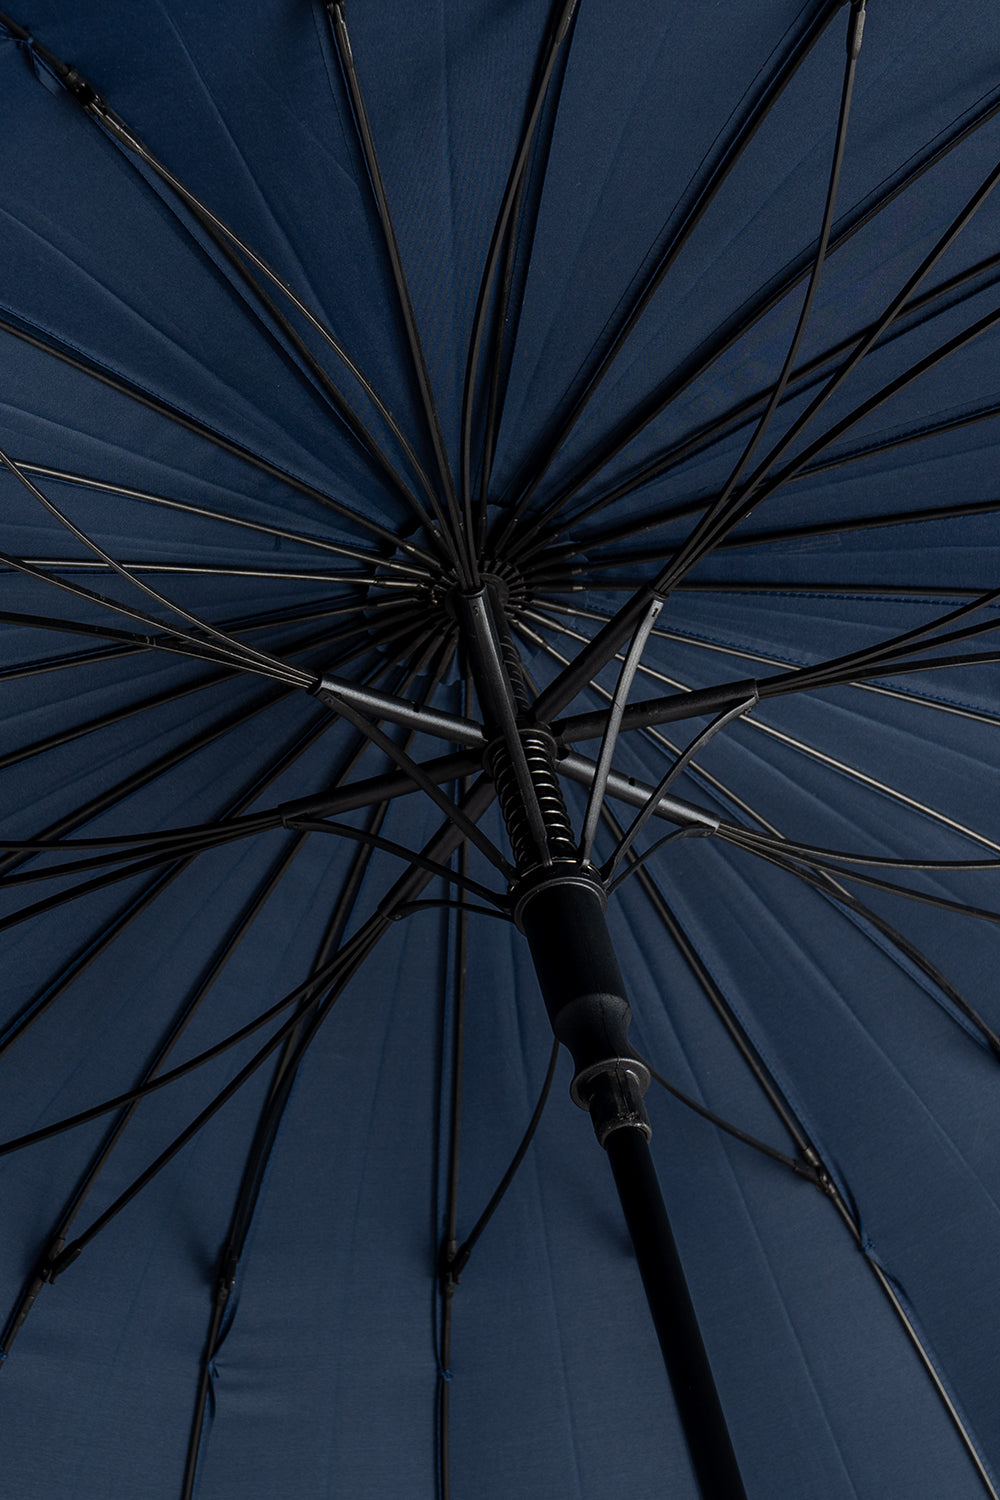 Oswin Hyde Umbrella Blue